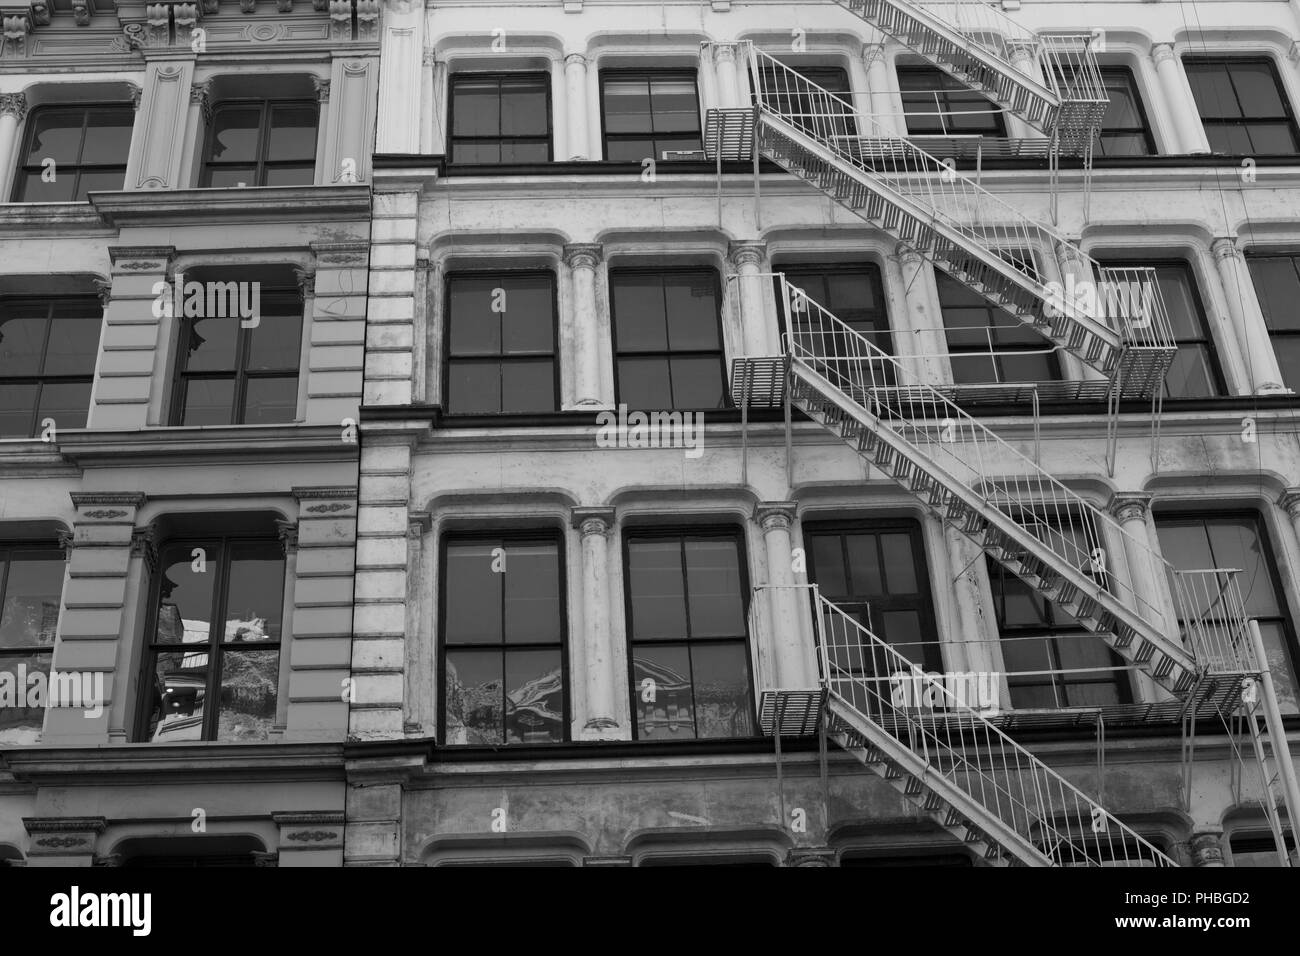 Fire escalators and windows Stock Photo